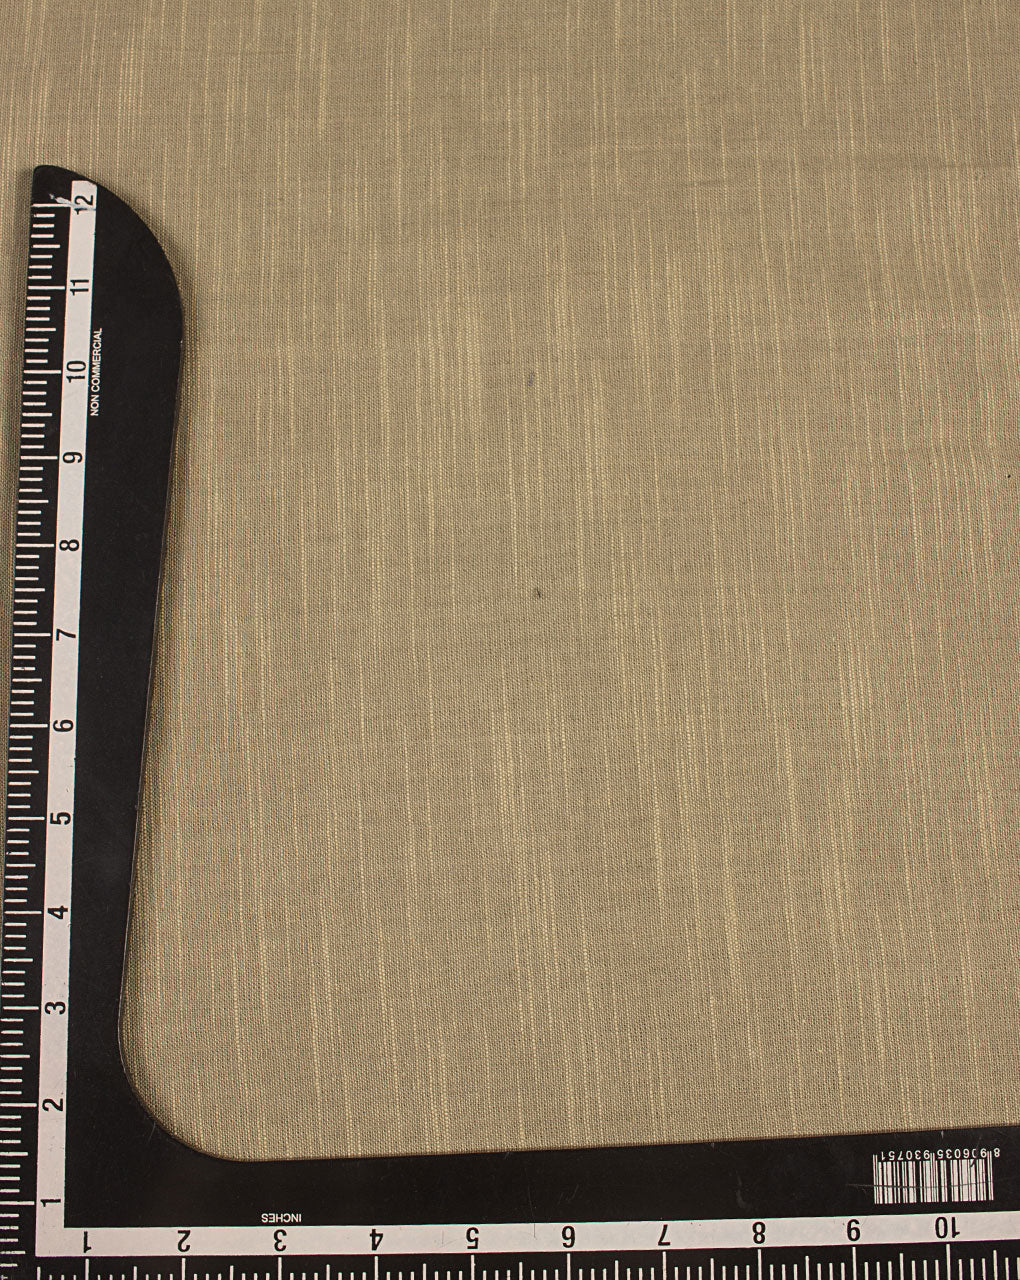 Sage Green Plain Woven Loom Textured Cotton Fabric - Fabriclore.com